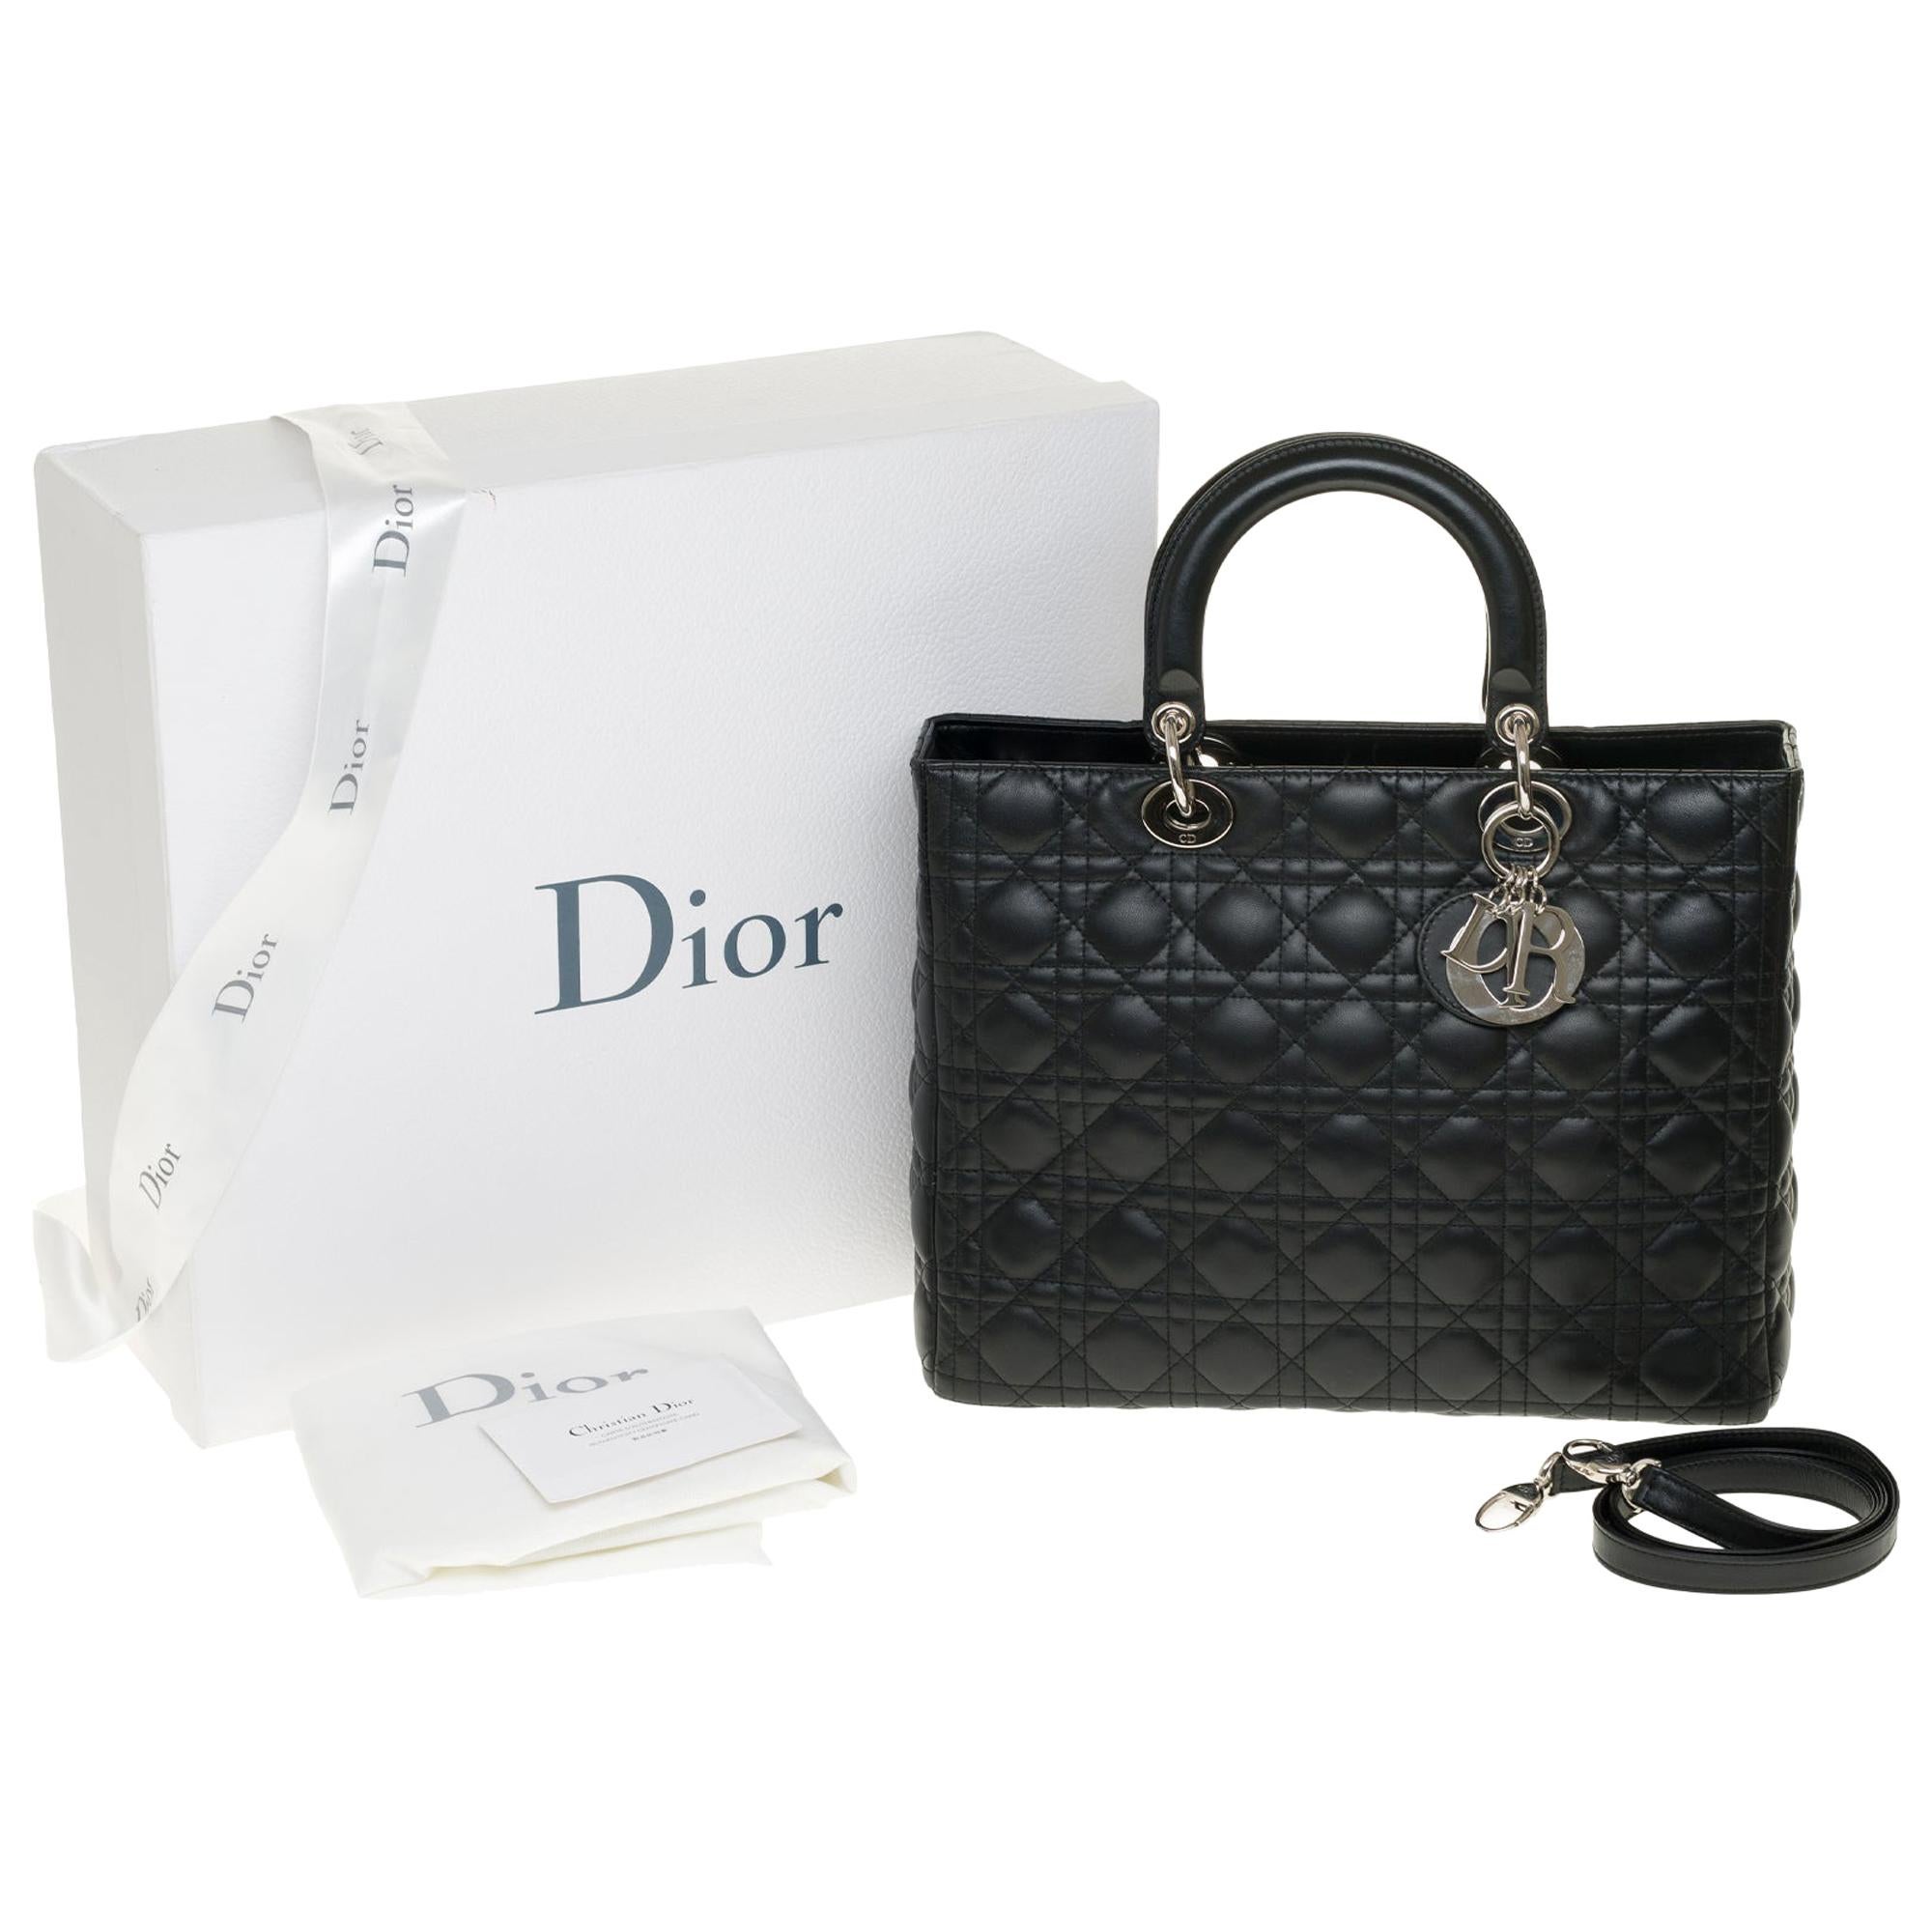  Lady Dior GM ( large model) shoulder bag with strap in black cannage, SHW